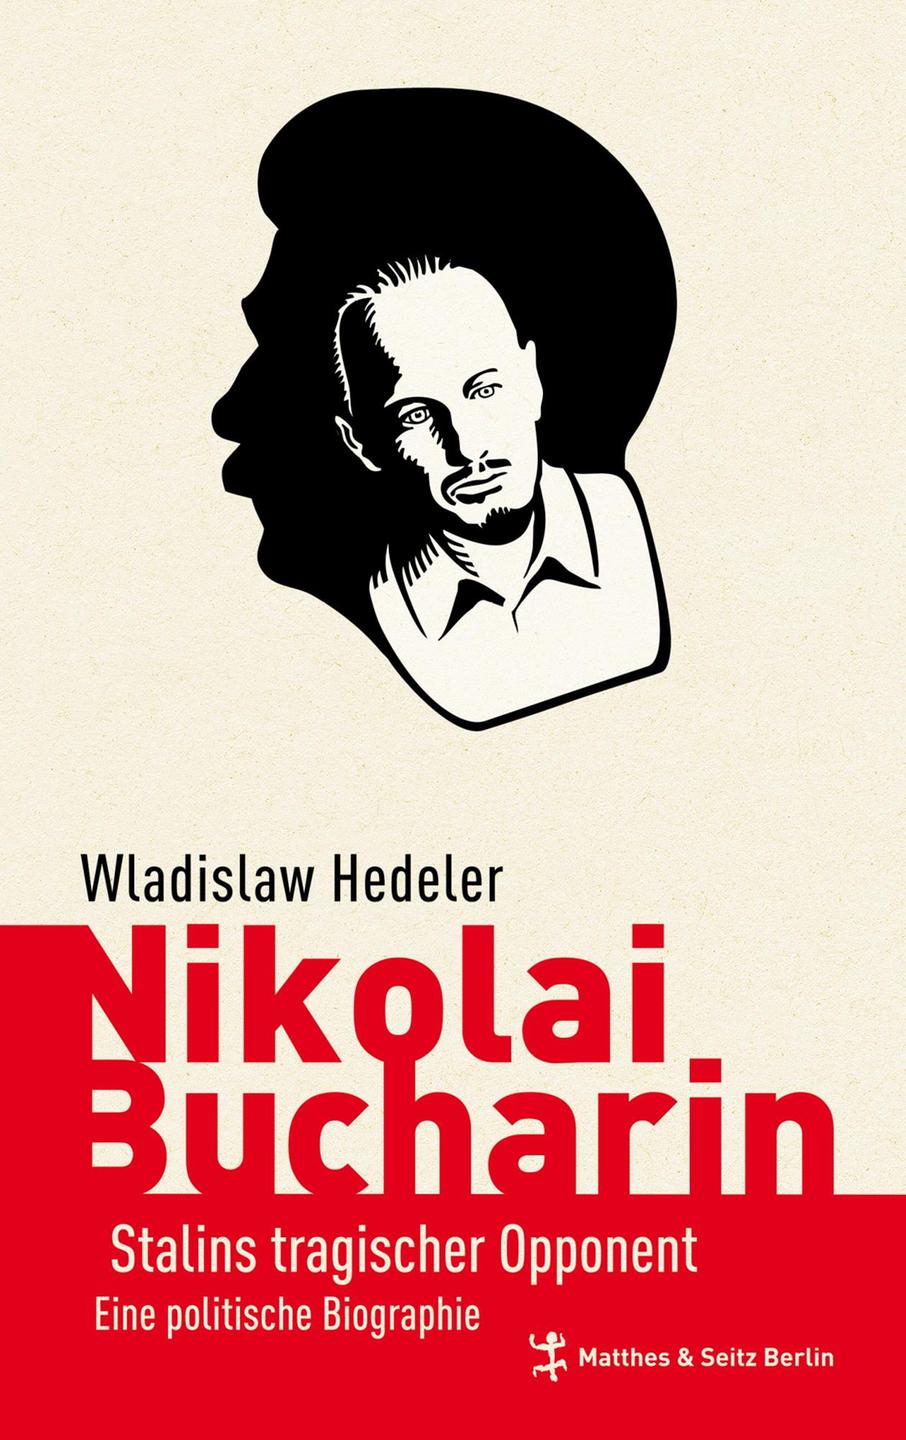 Cover Wladislaw Hedeler "Nikolai Bucharin. Stalins tragischer Opponent"